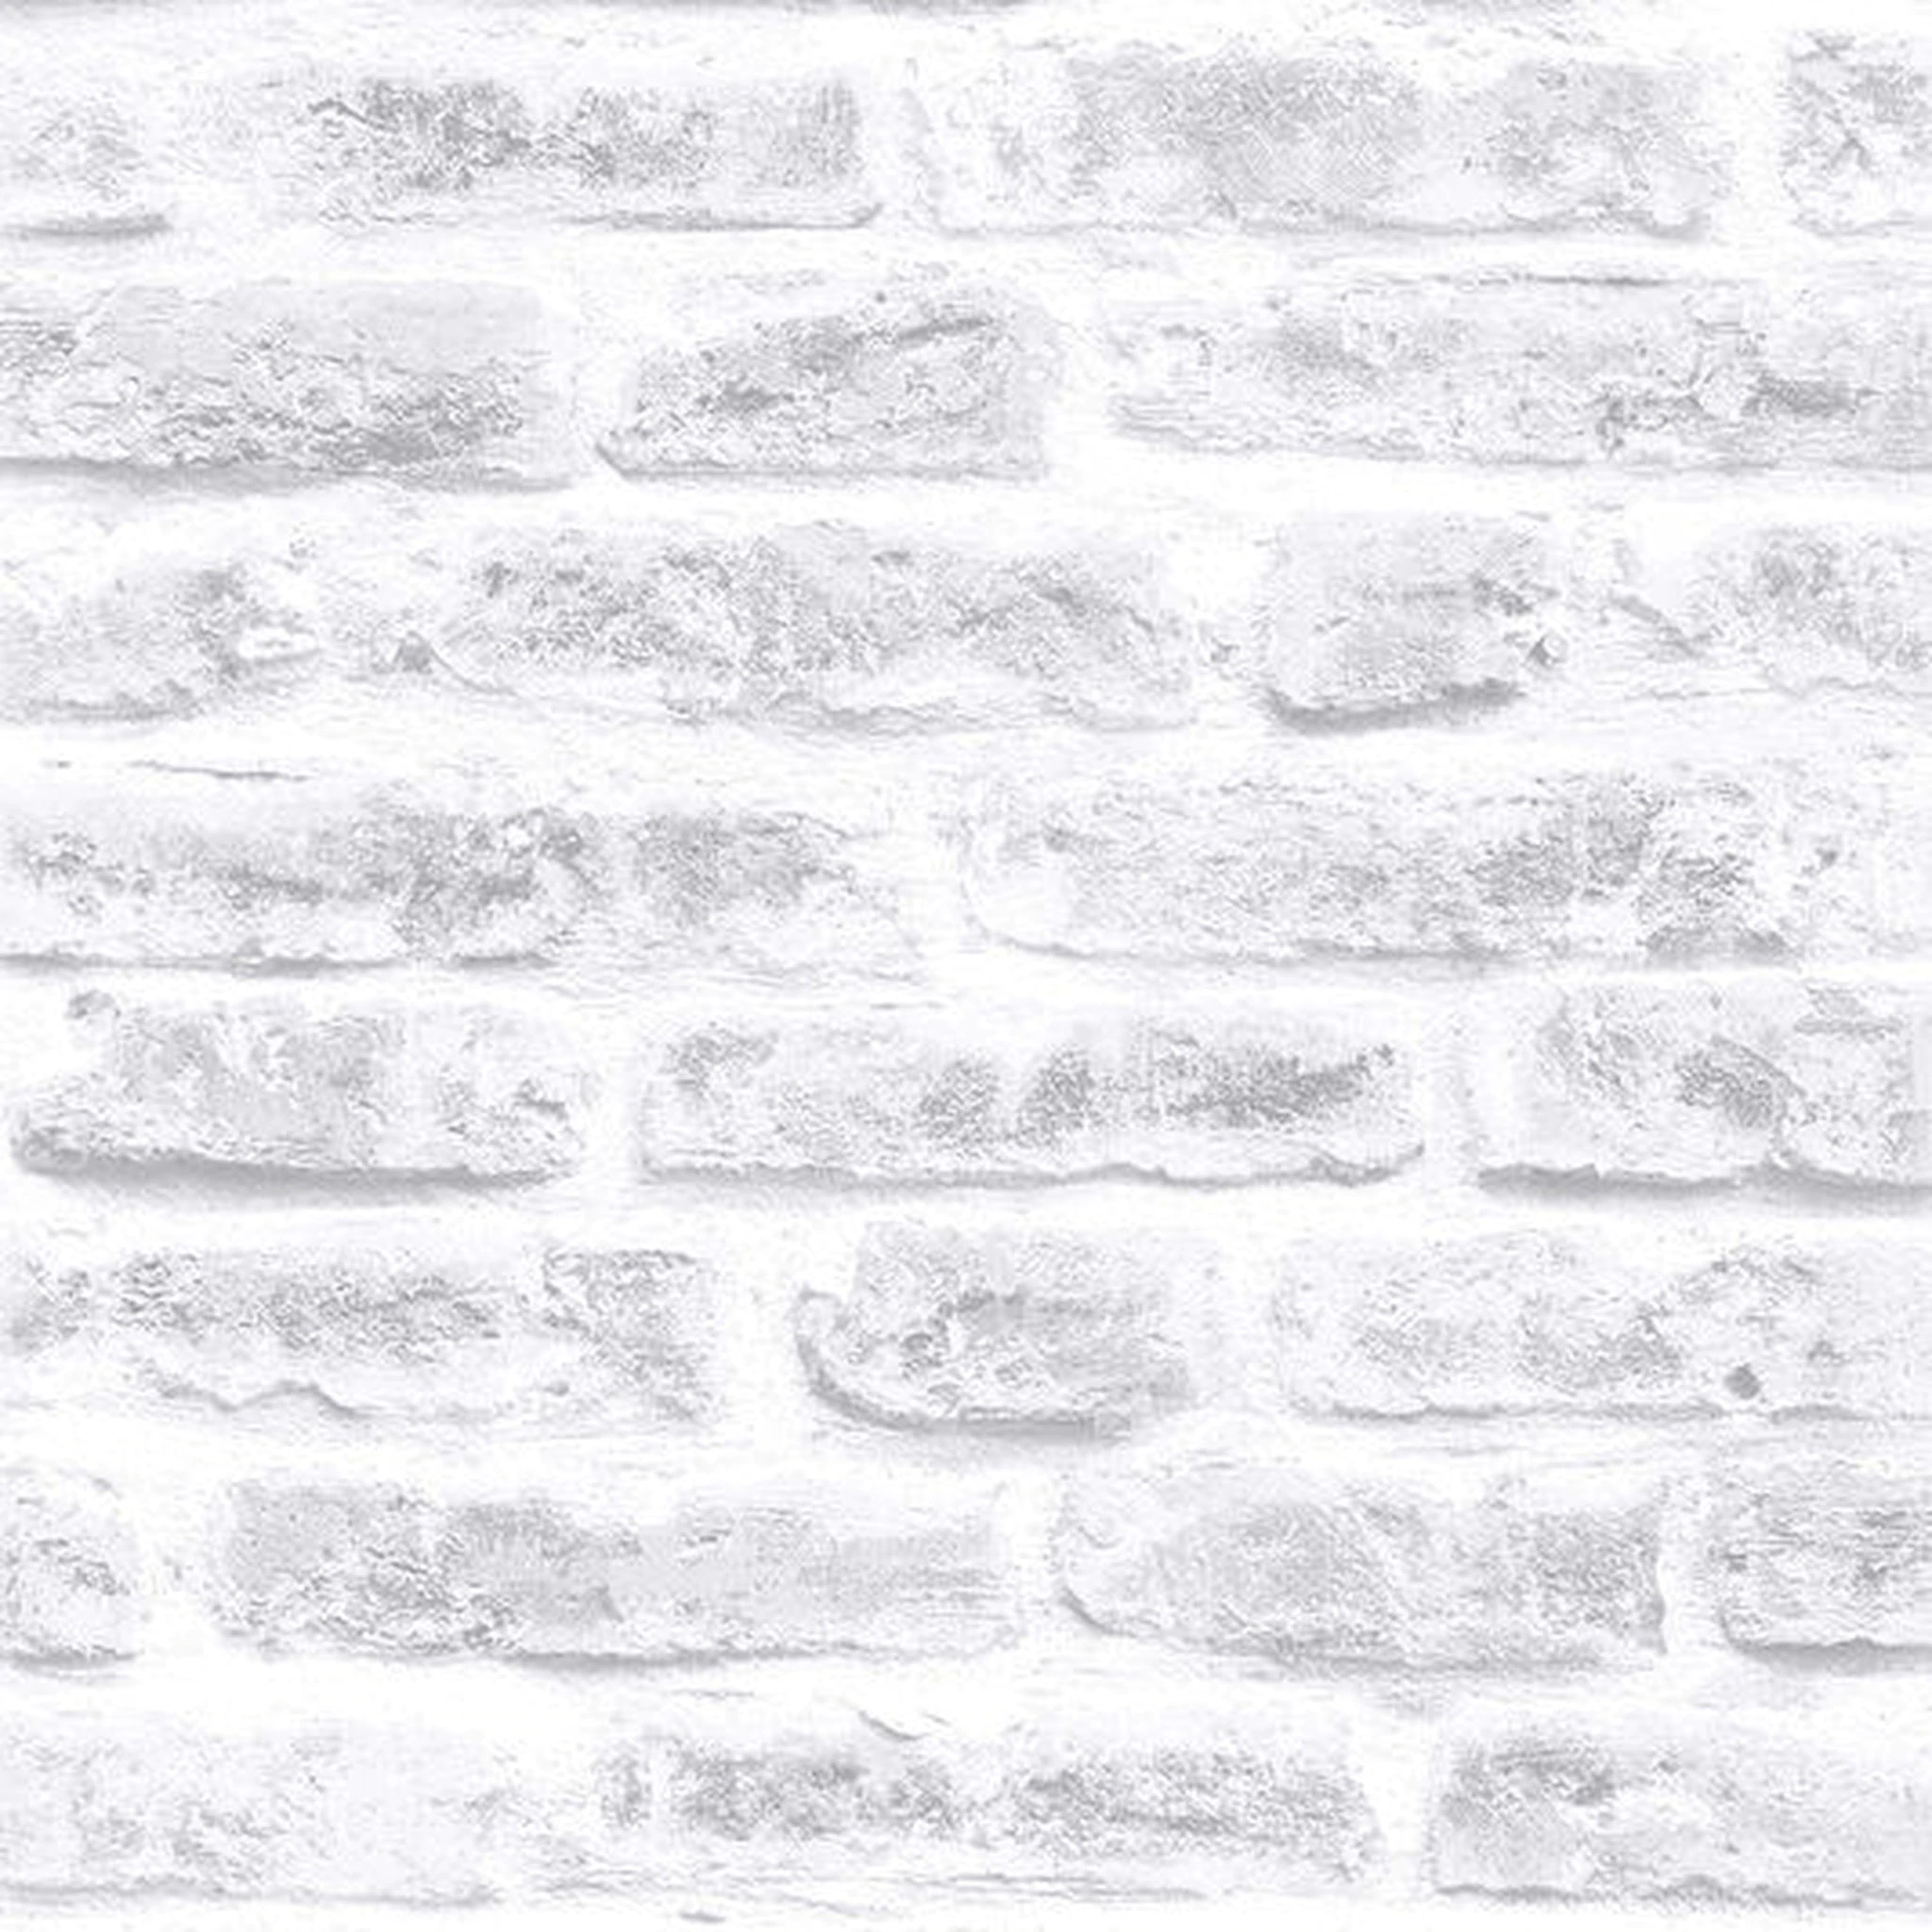 White Realistic Brick Wallpaper Graham & Brown